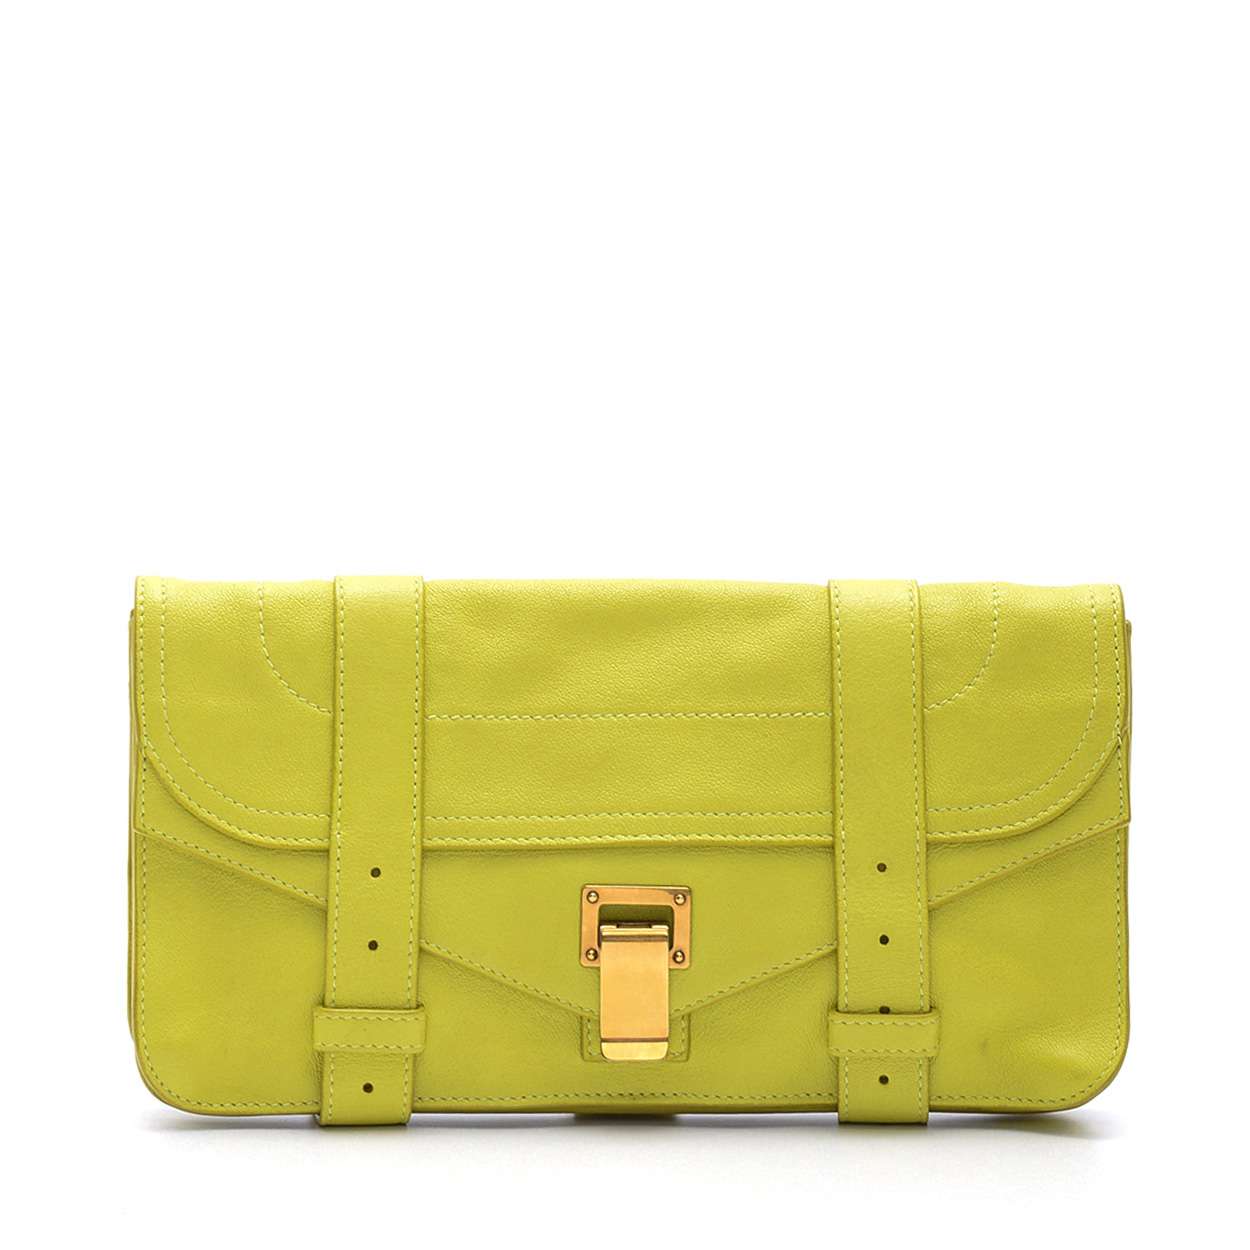 Proenza Schouler - Lemon Yellow Leather Ps1 Pochette Clutch Bag